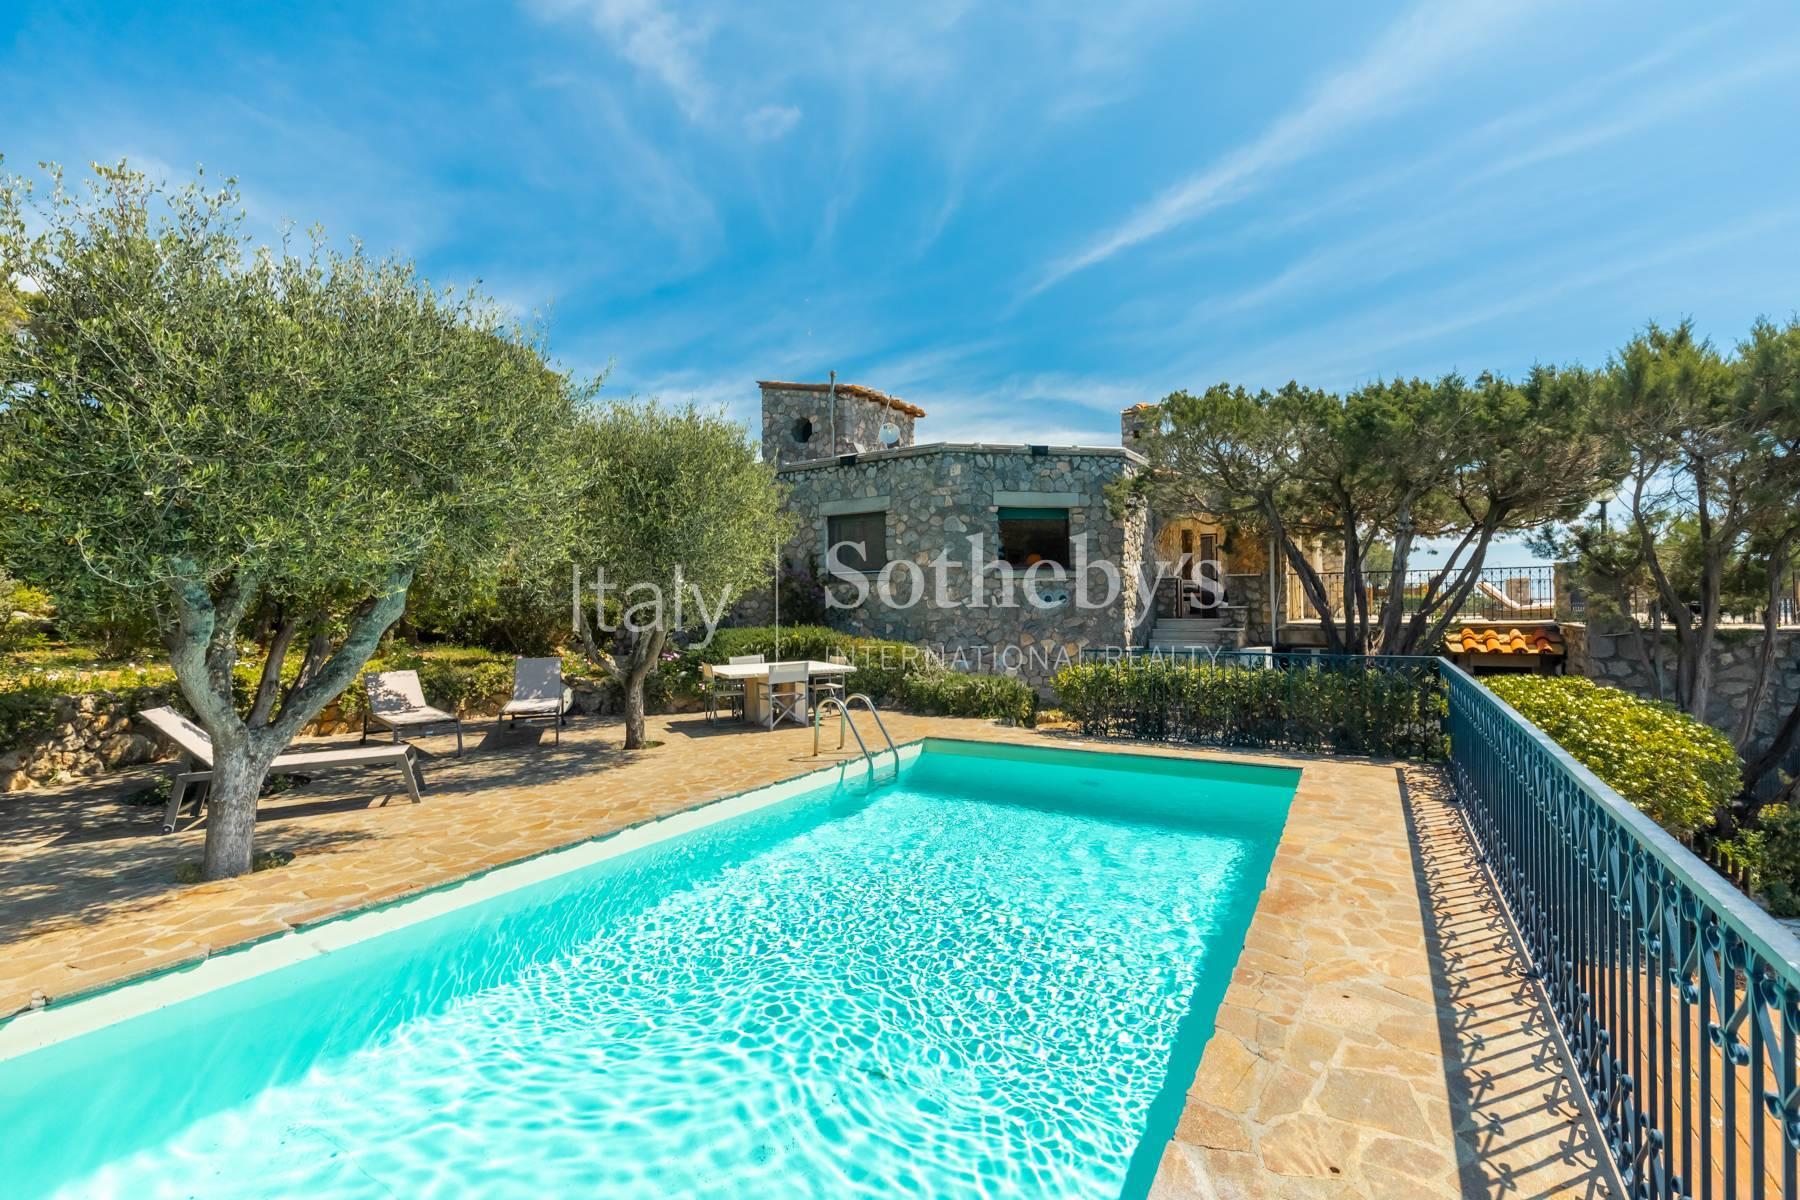 Stunning Villa Pied dans l'eau with pool in Monte Argentario - 18